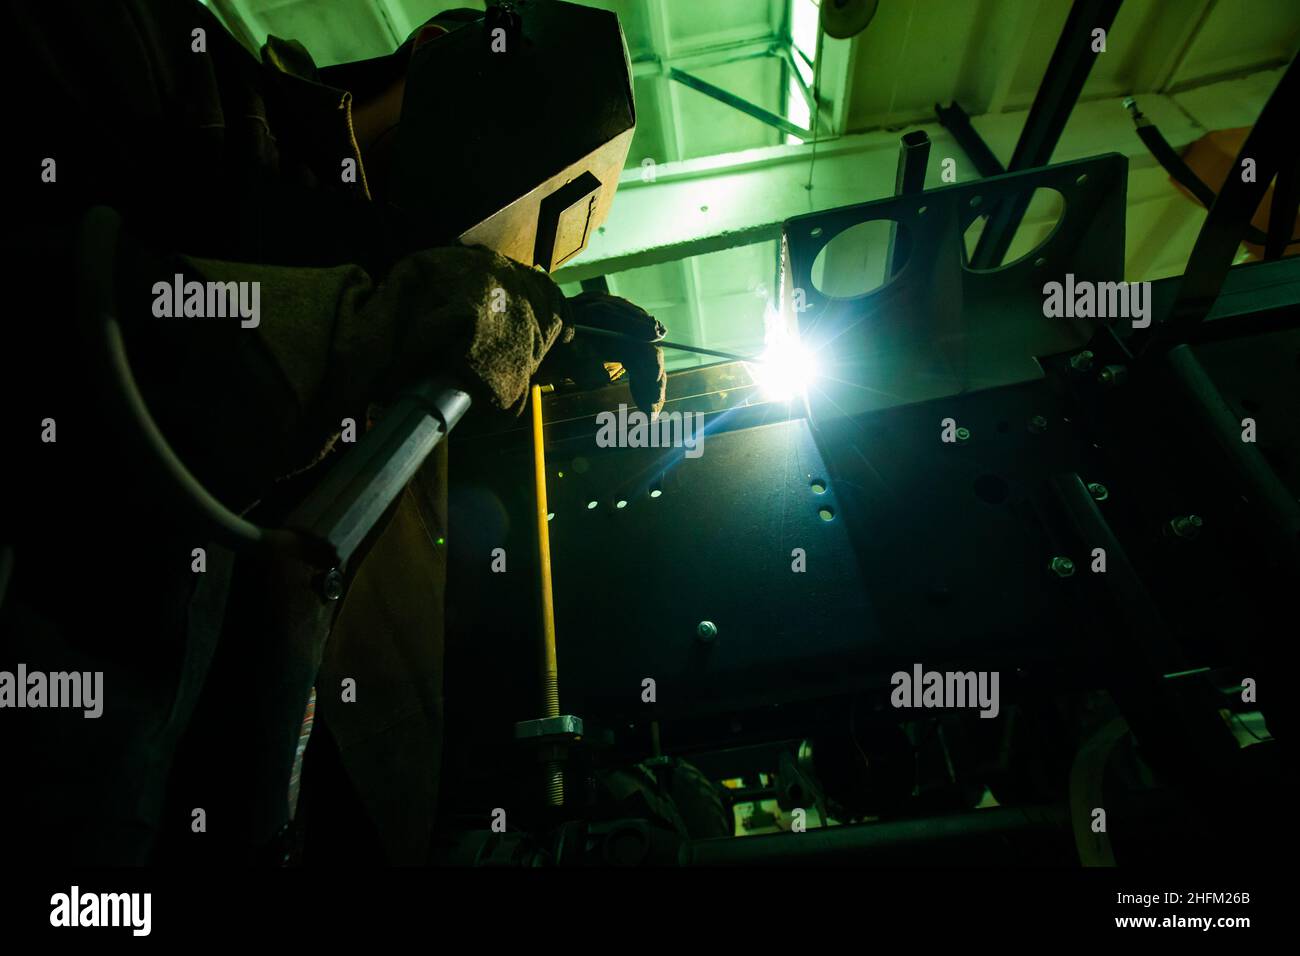 Welder in protective mask on green light welding metal part. Stock Photo